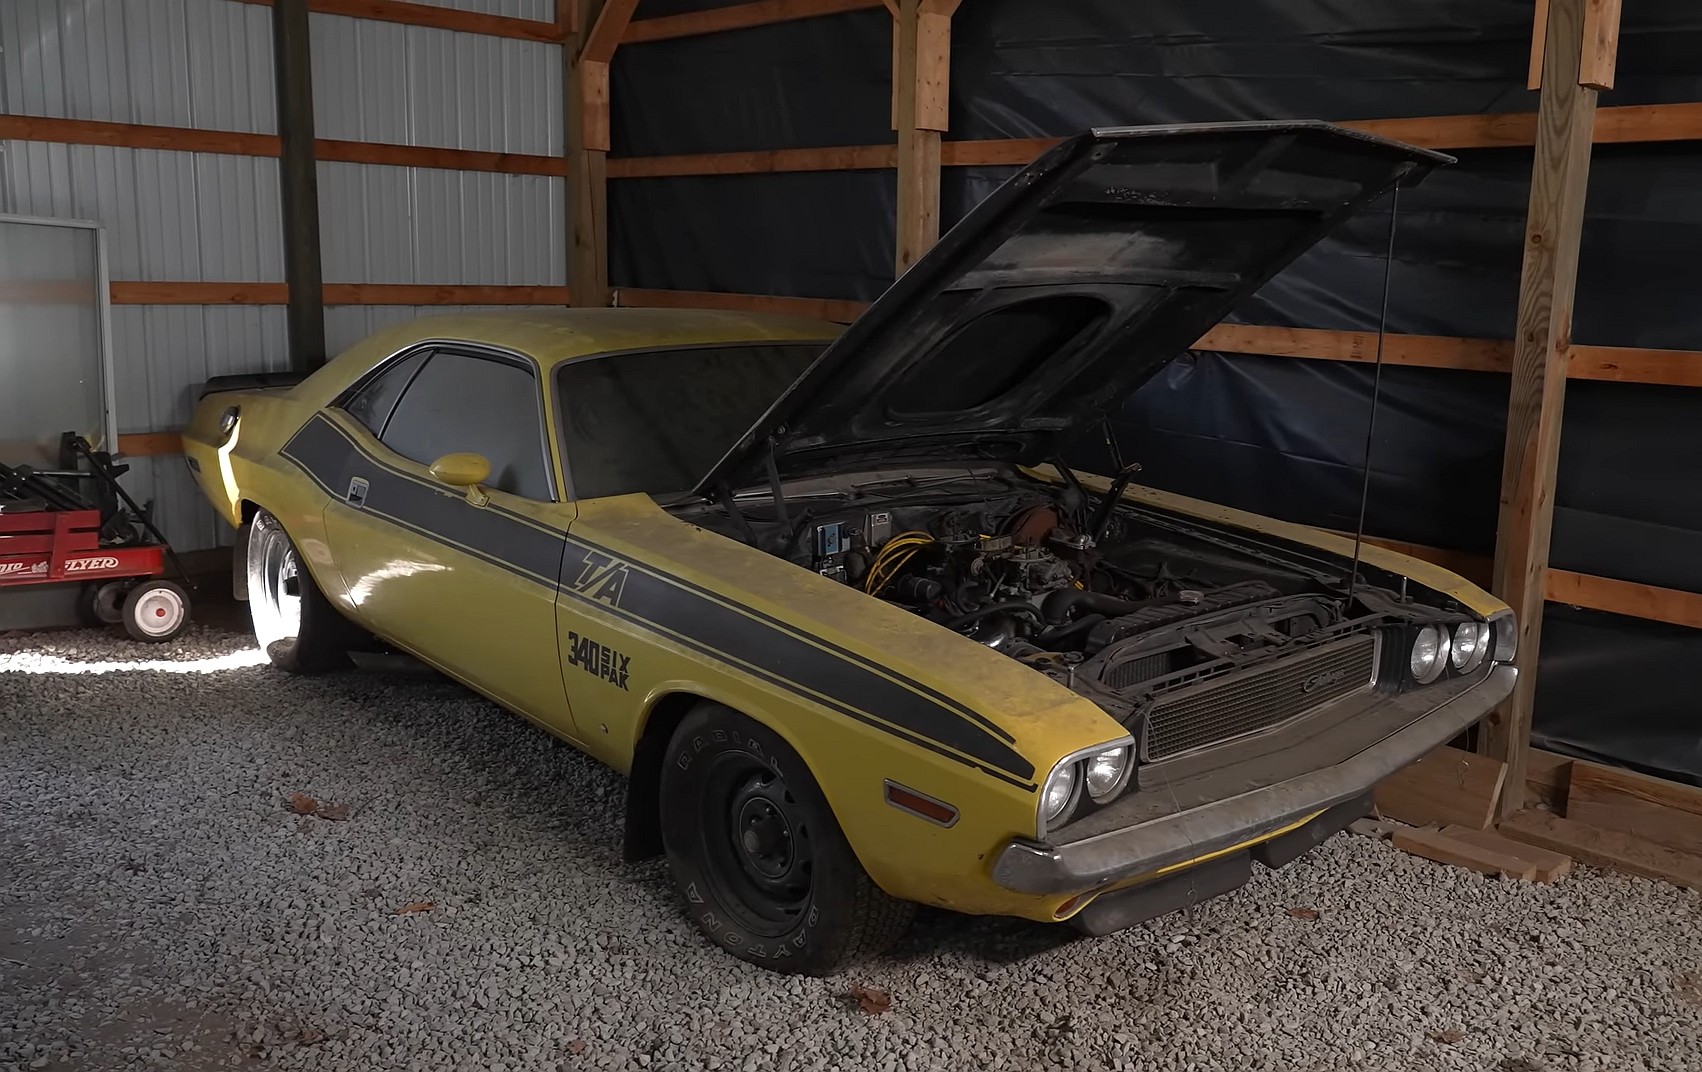 1970 Dodge Challenger T/A Parked for 39 Years Is an Unmolested Survivor That Still Runs - autoevolution